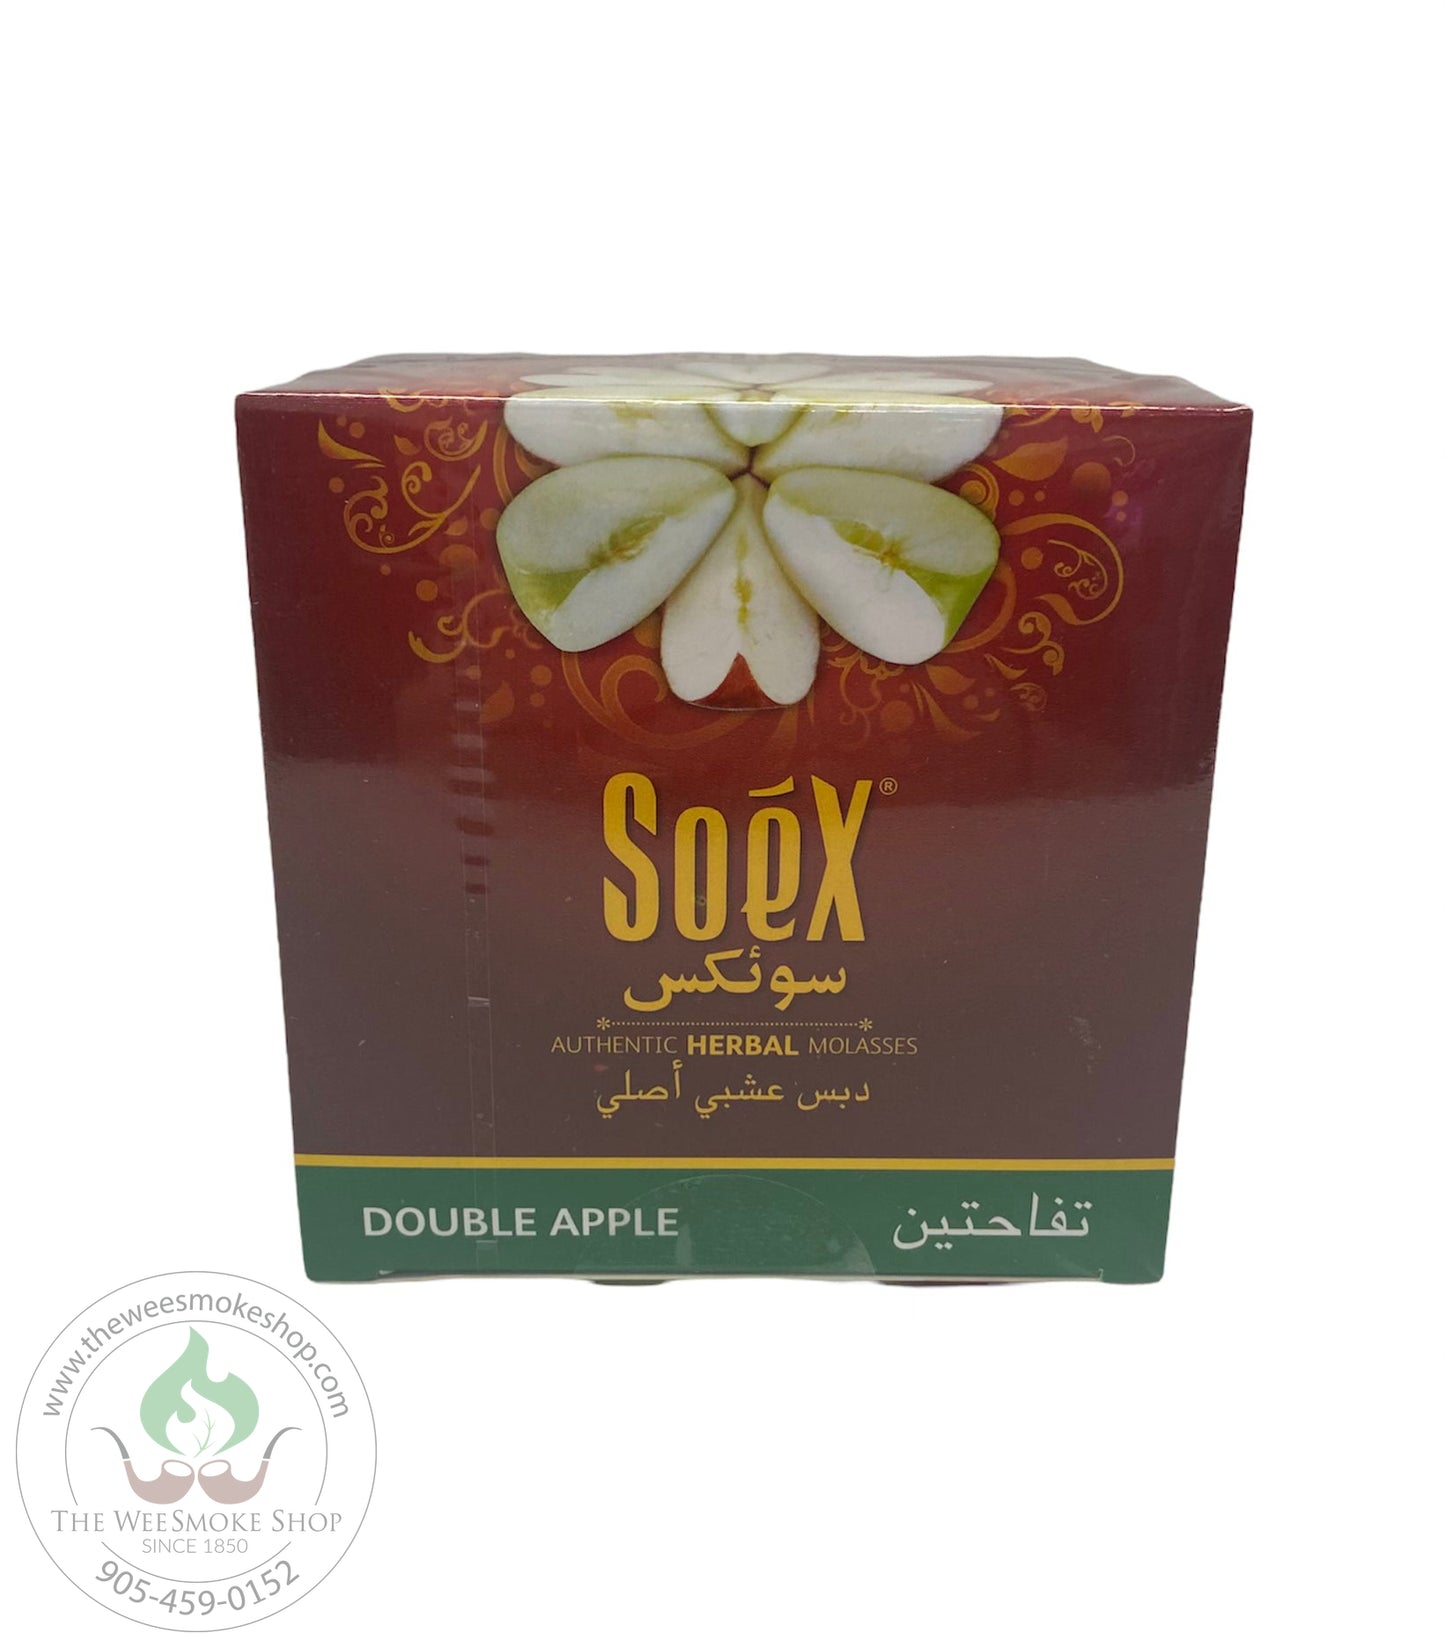 Double Apple Soex Herbal Molasses (250g)-Hookah accessories-The Wee Smoke Shop